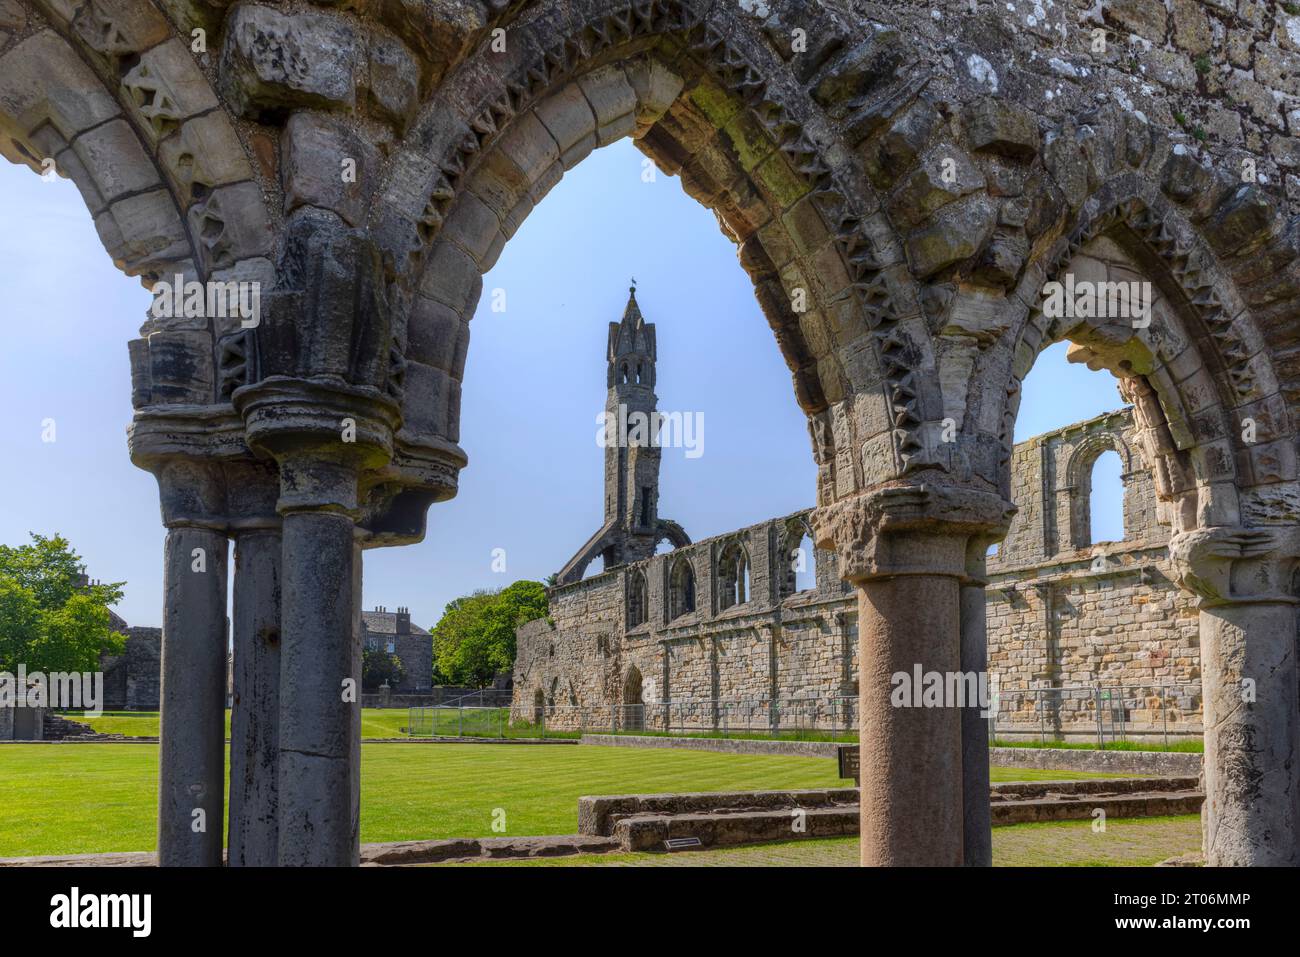 St Andrews in Fife, Scotland. Stock Photo